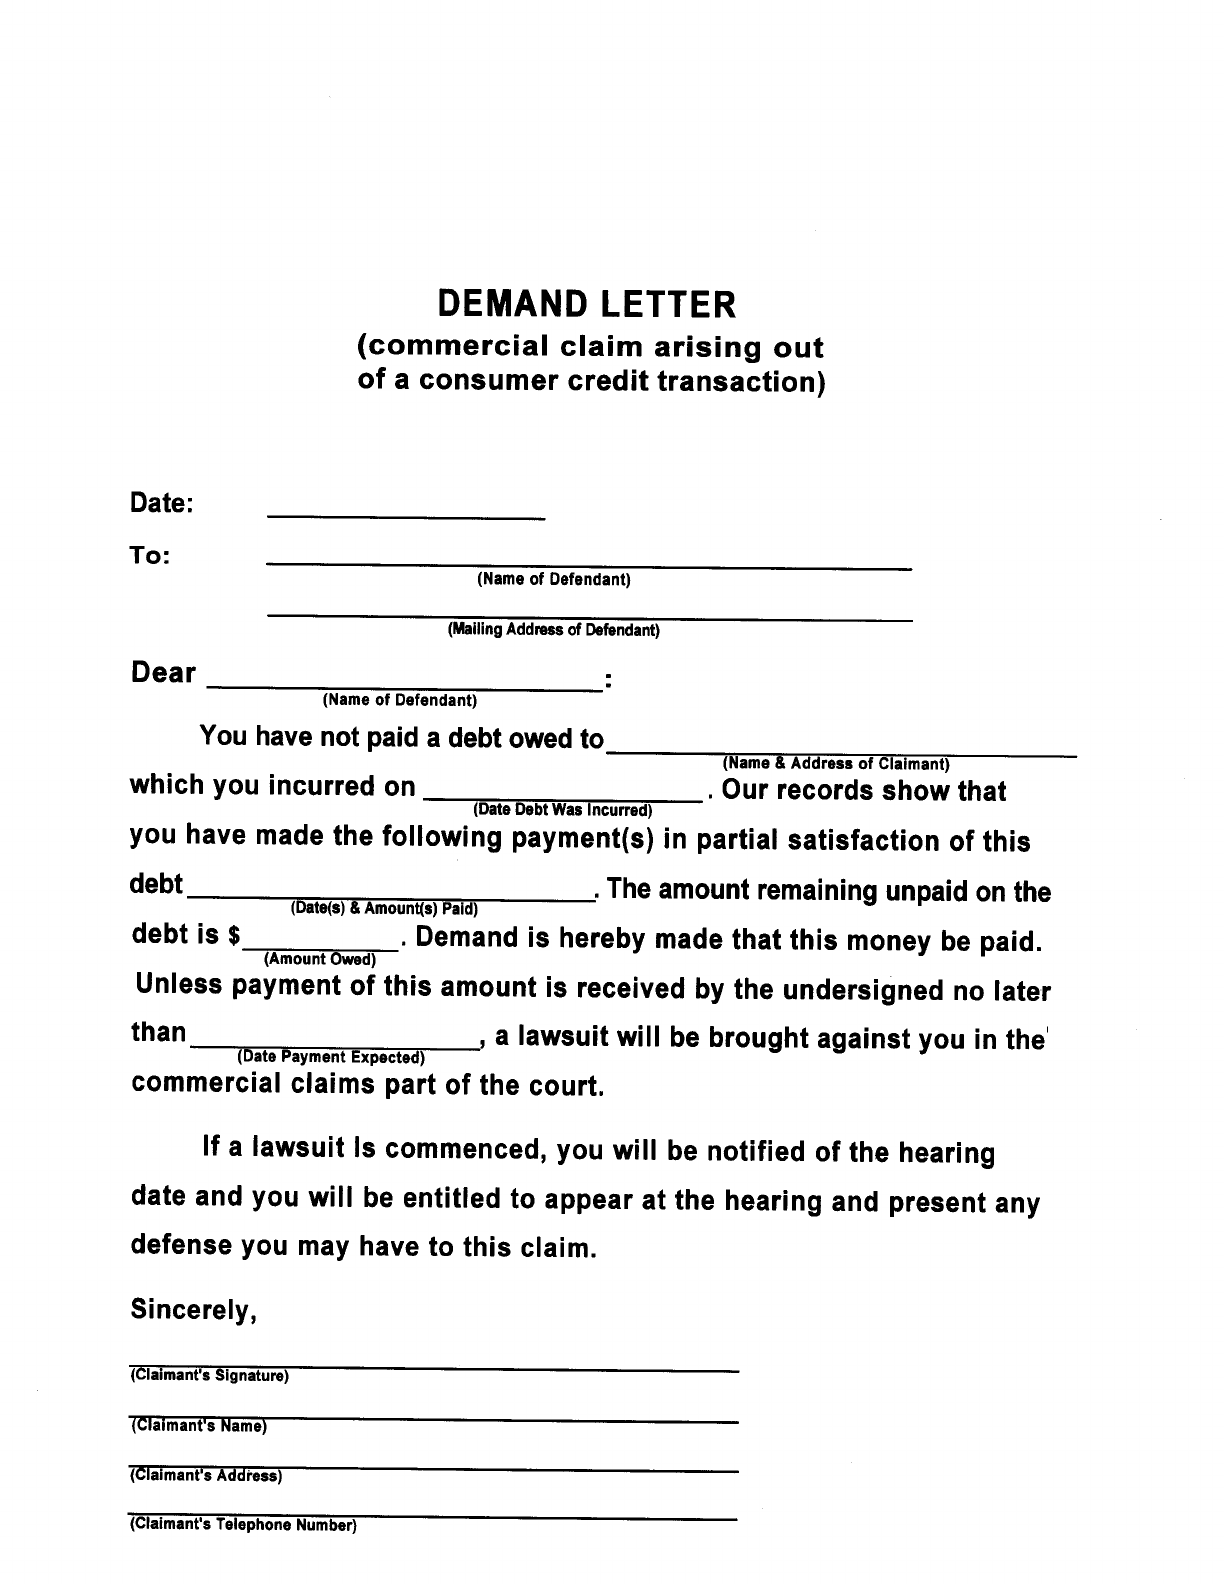 Demand Letter Sample 4